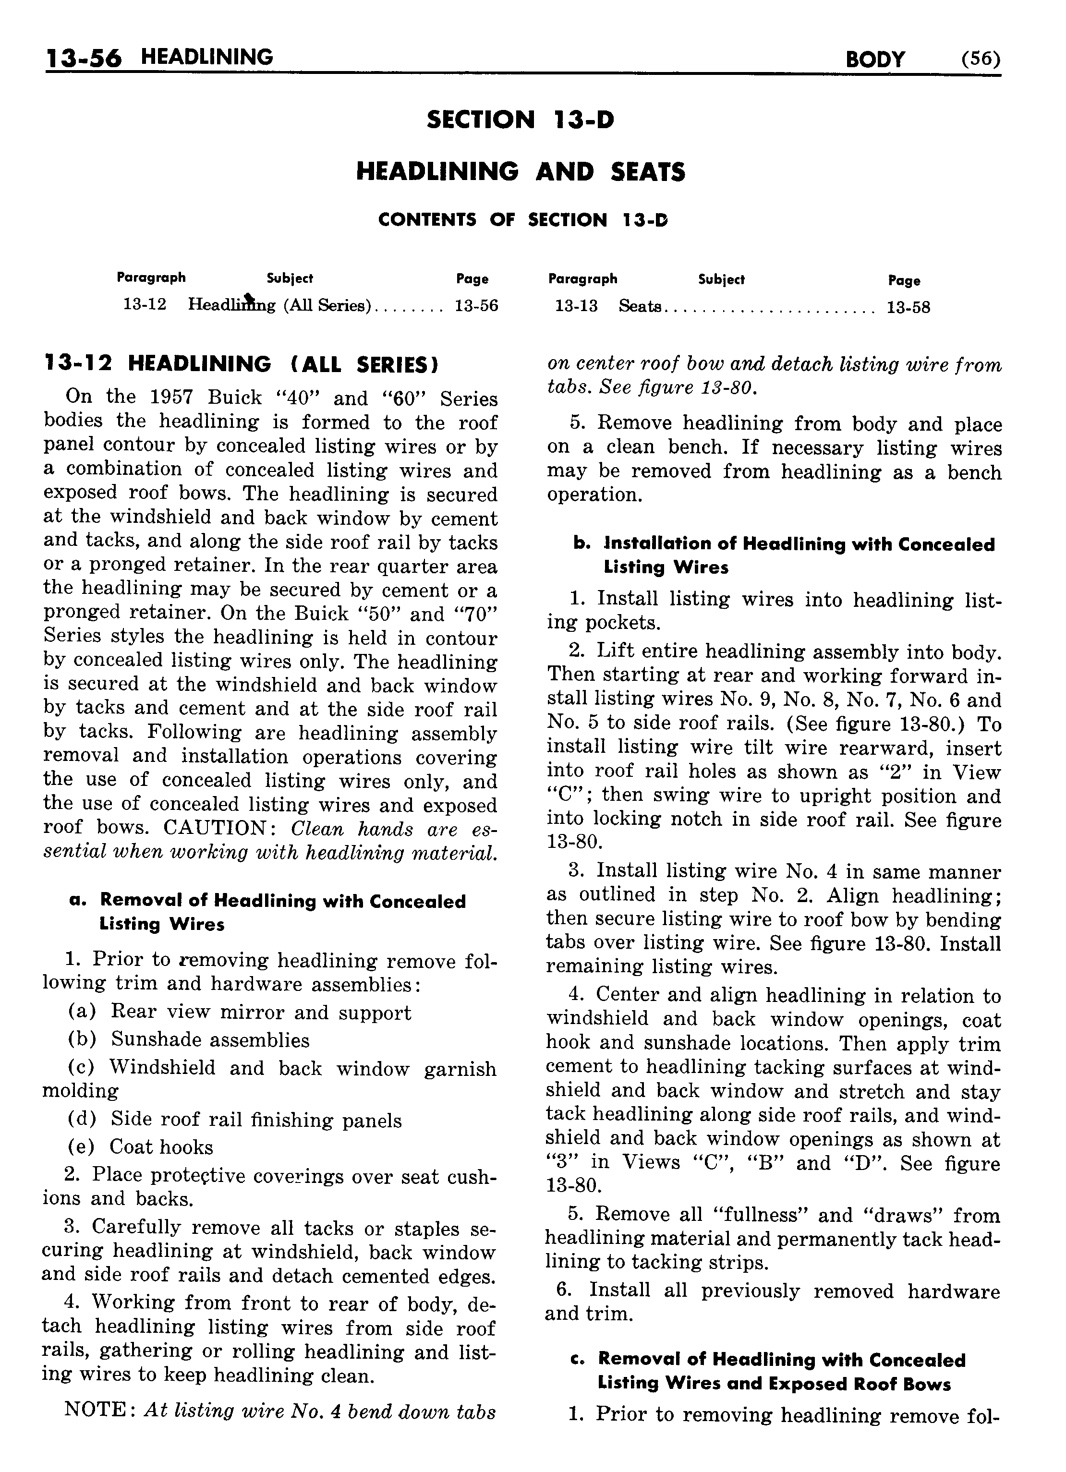 n_1957 Buick Body Service Manual-058-058.jpg